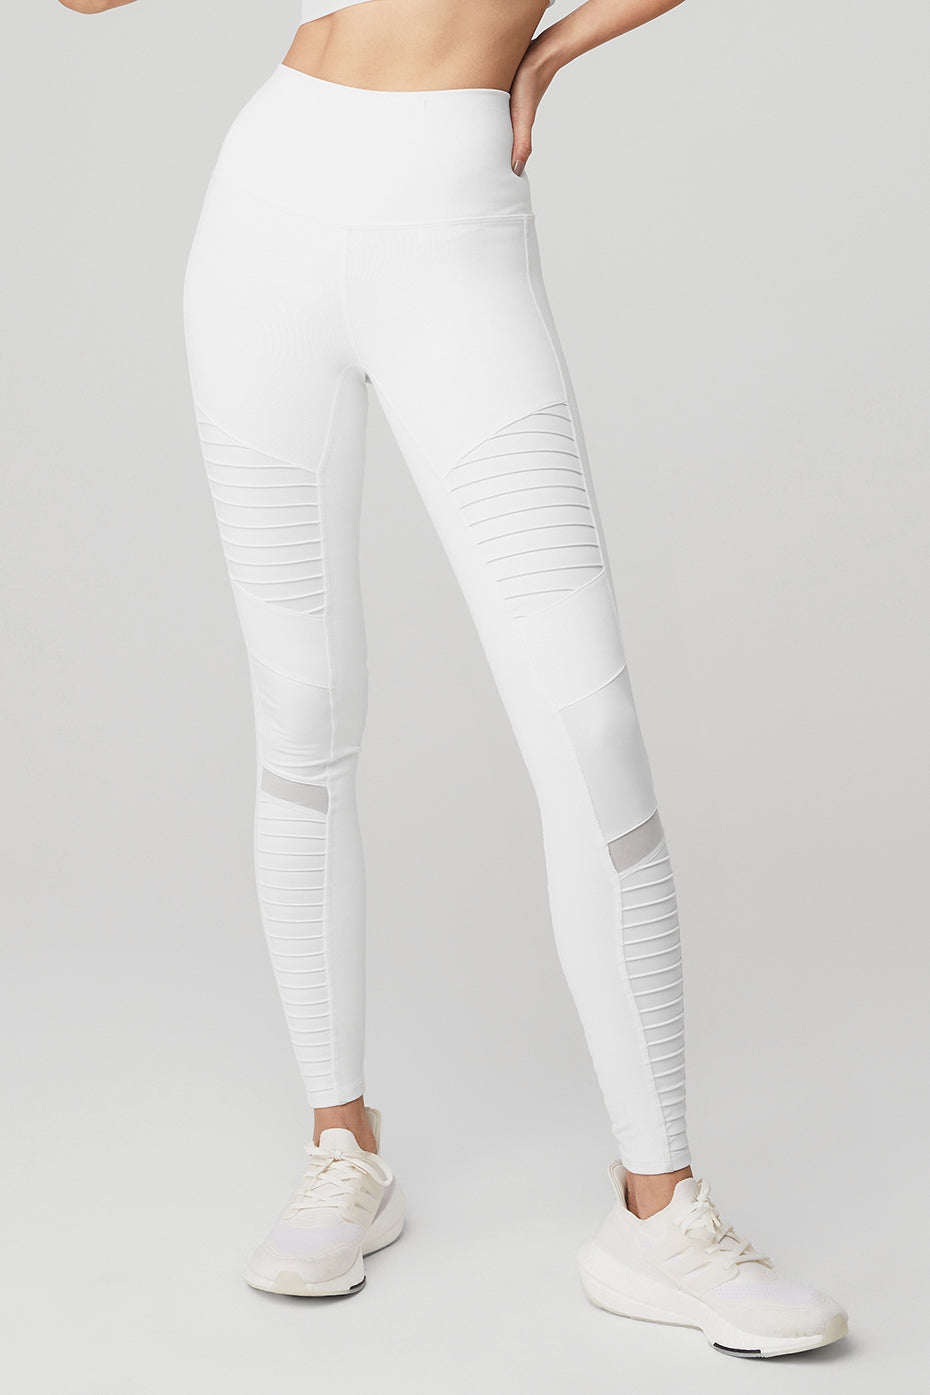 Alo Yoga All Yoga White Camo Leggings Size M - $35 (72% Off Retail) - From  Claire